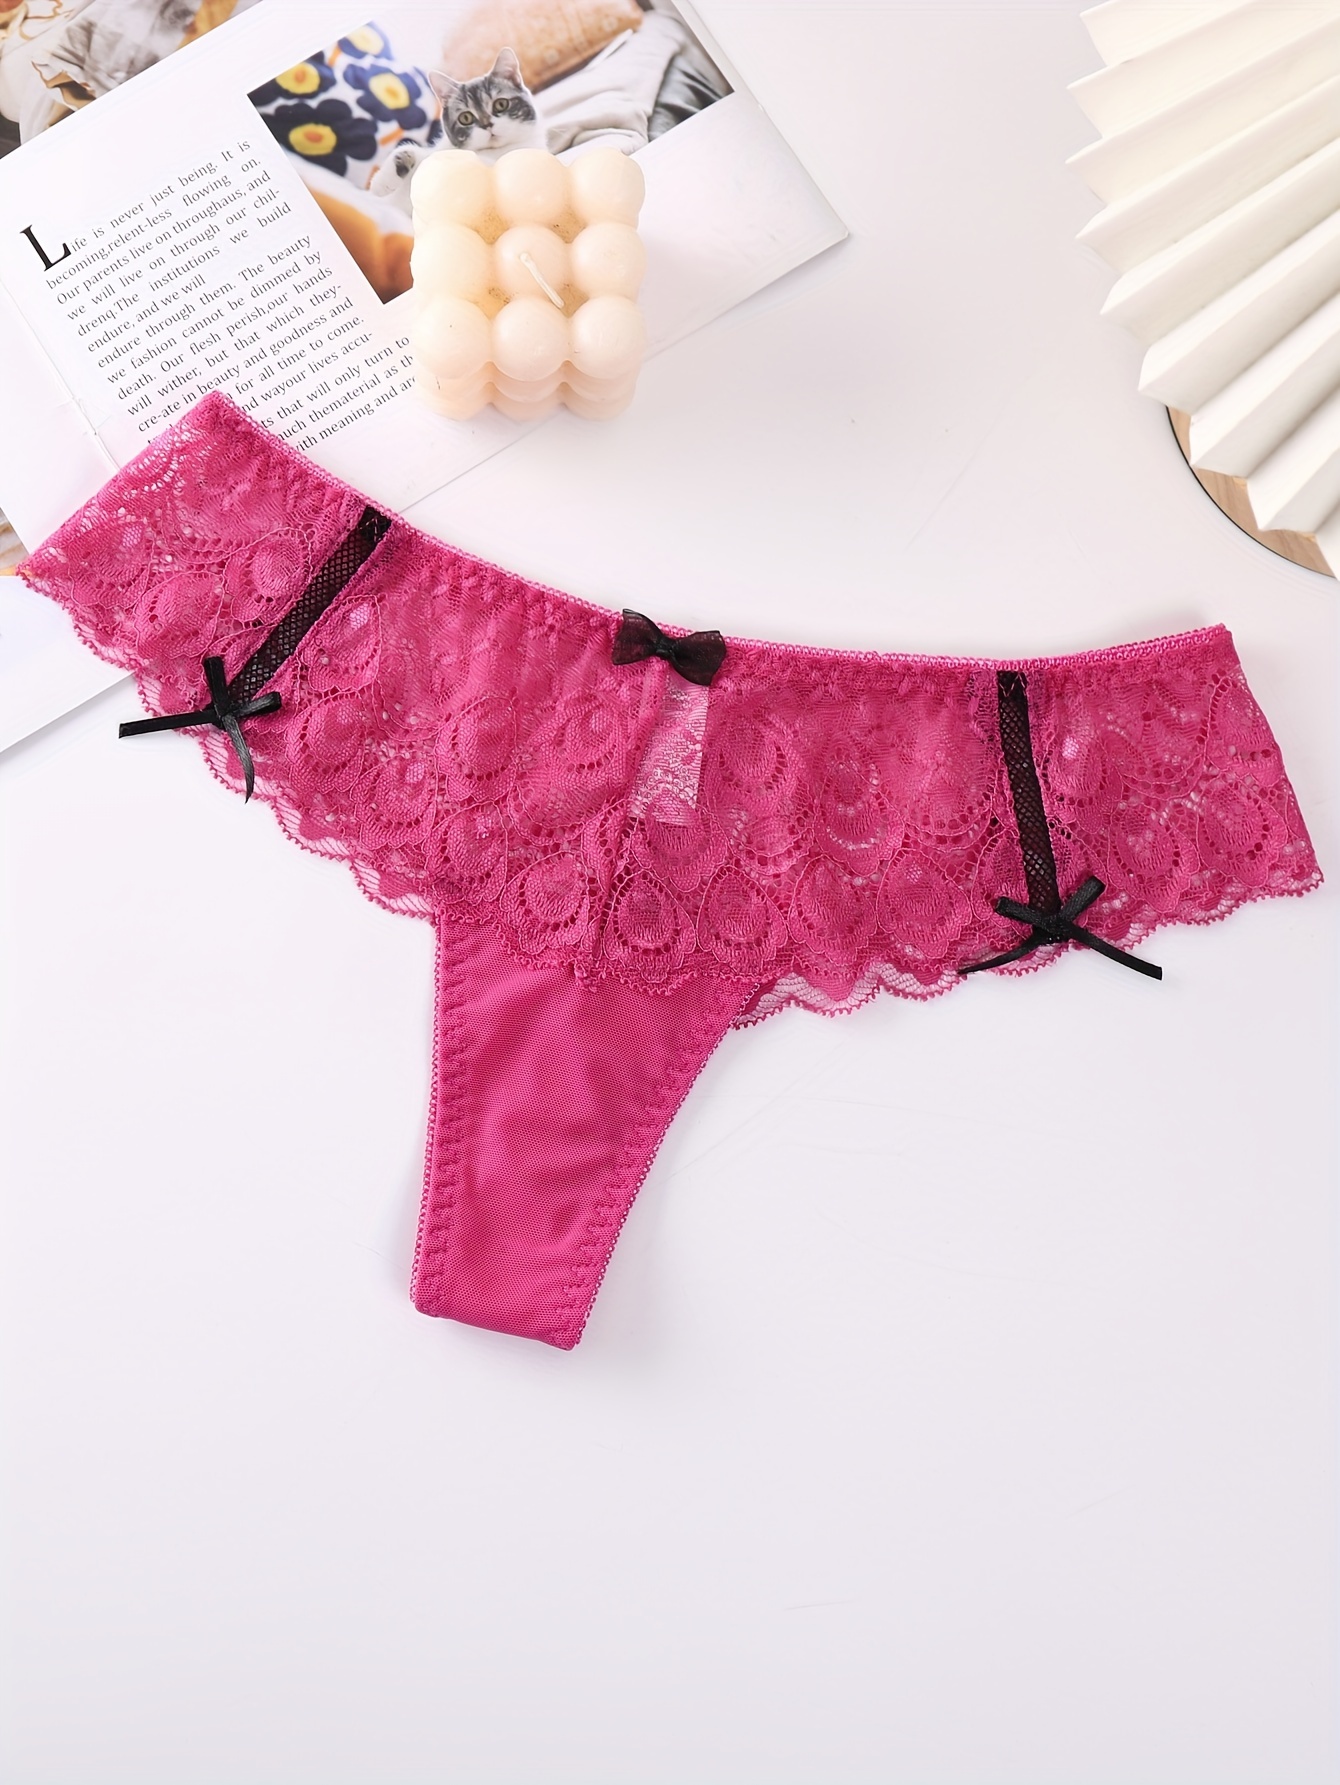 3 lace tongs panties, pink color